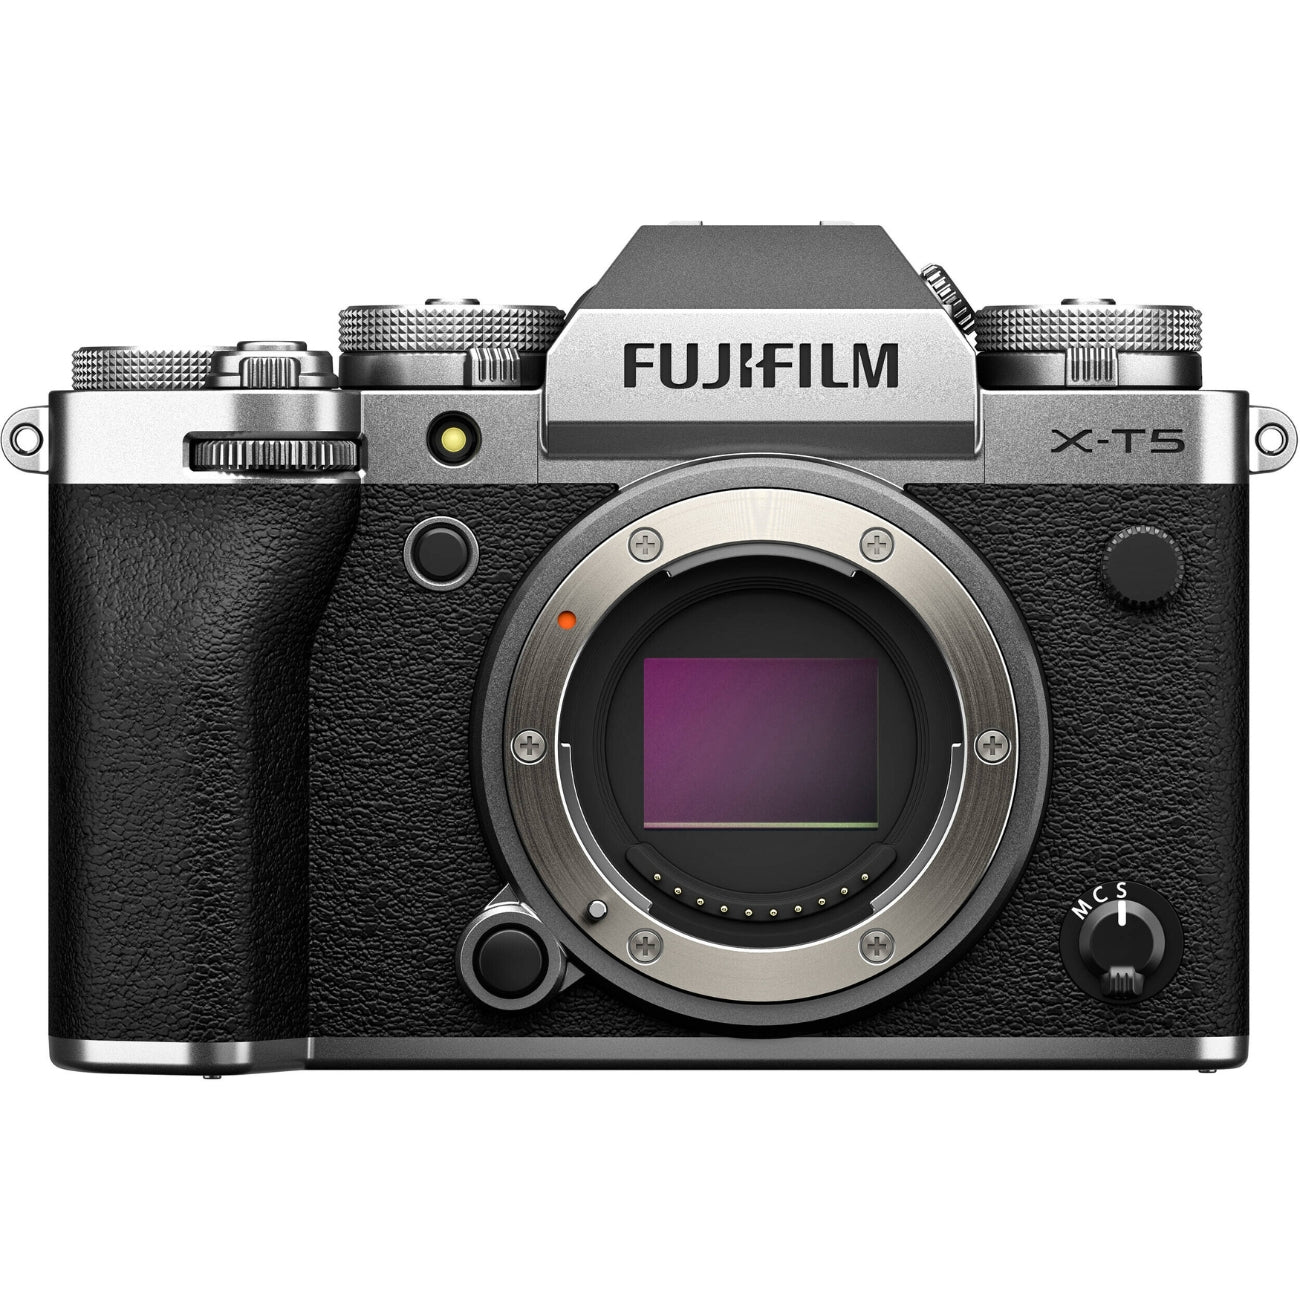 Fujifilm X-T5 Mirrorless Camera (Silver) - Front View